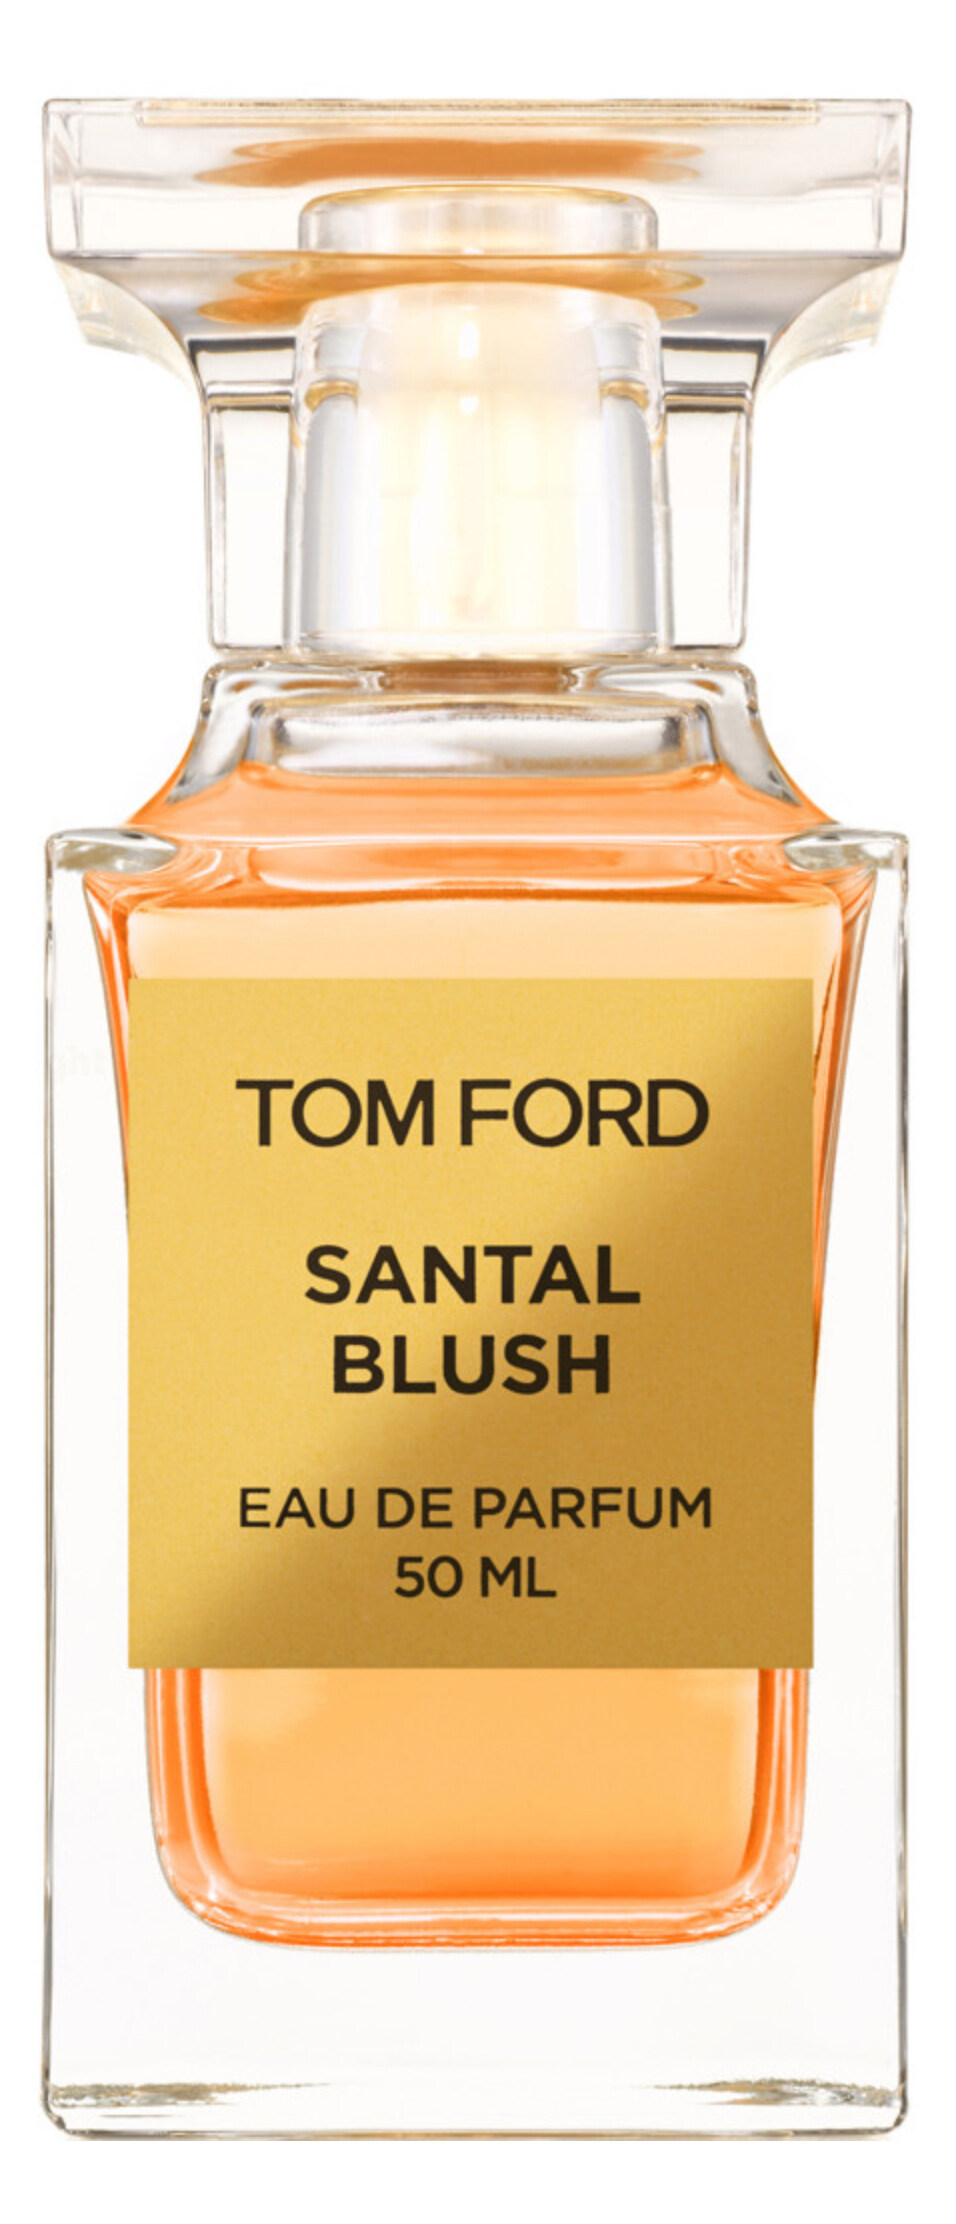 Santal Blush by Tom Ford » Reviews & Perfume Facts